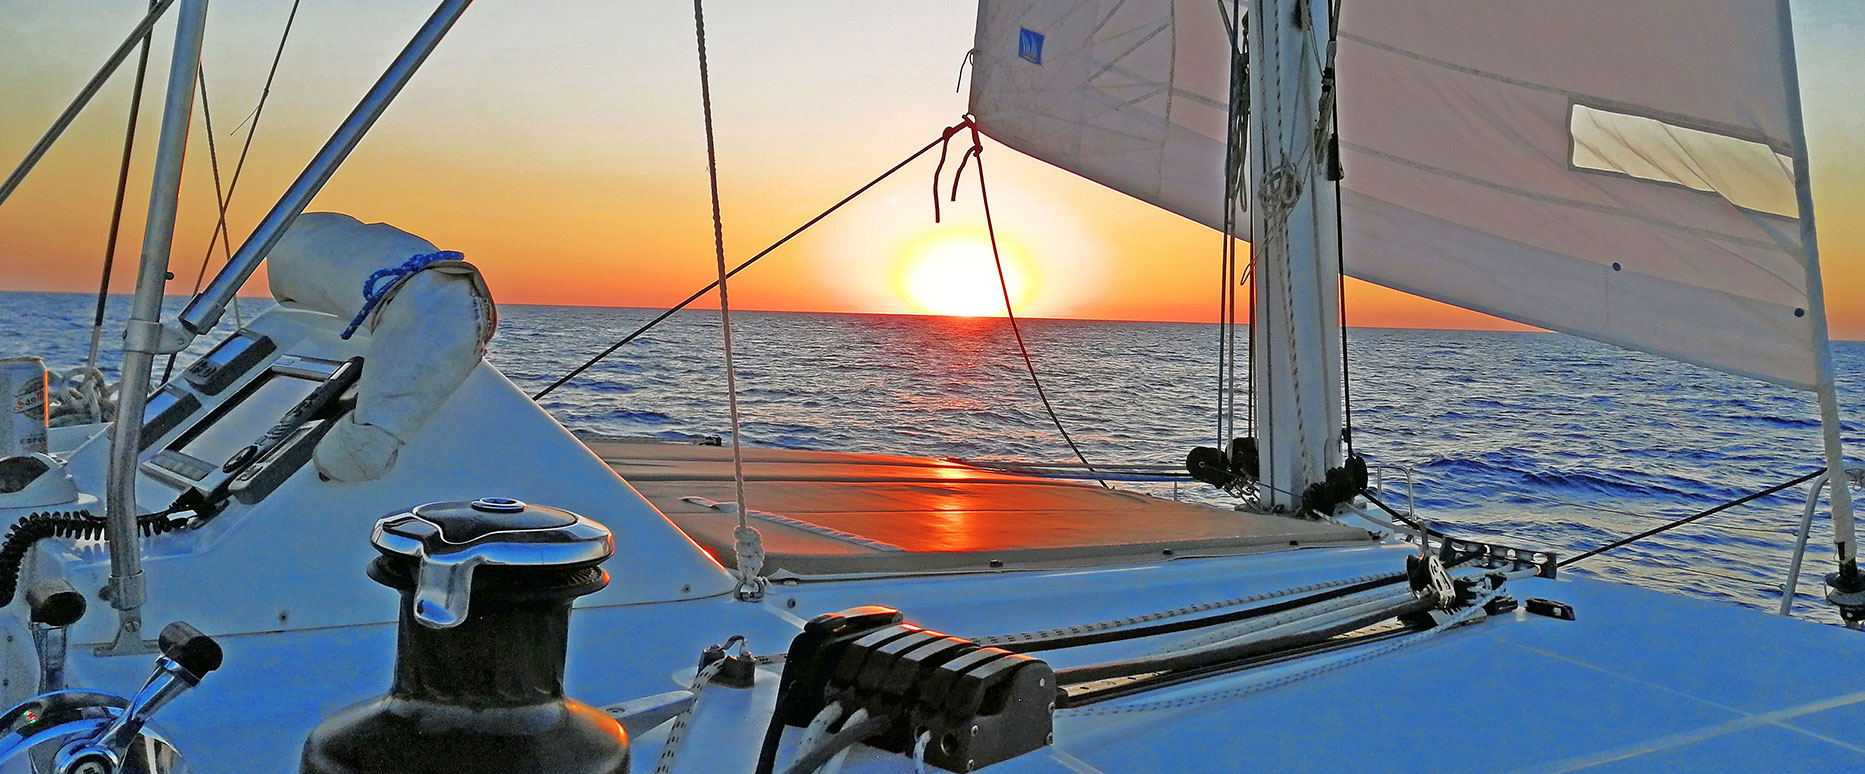 sunrise-on-catamaran-header